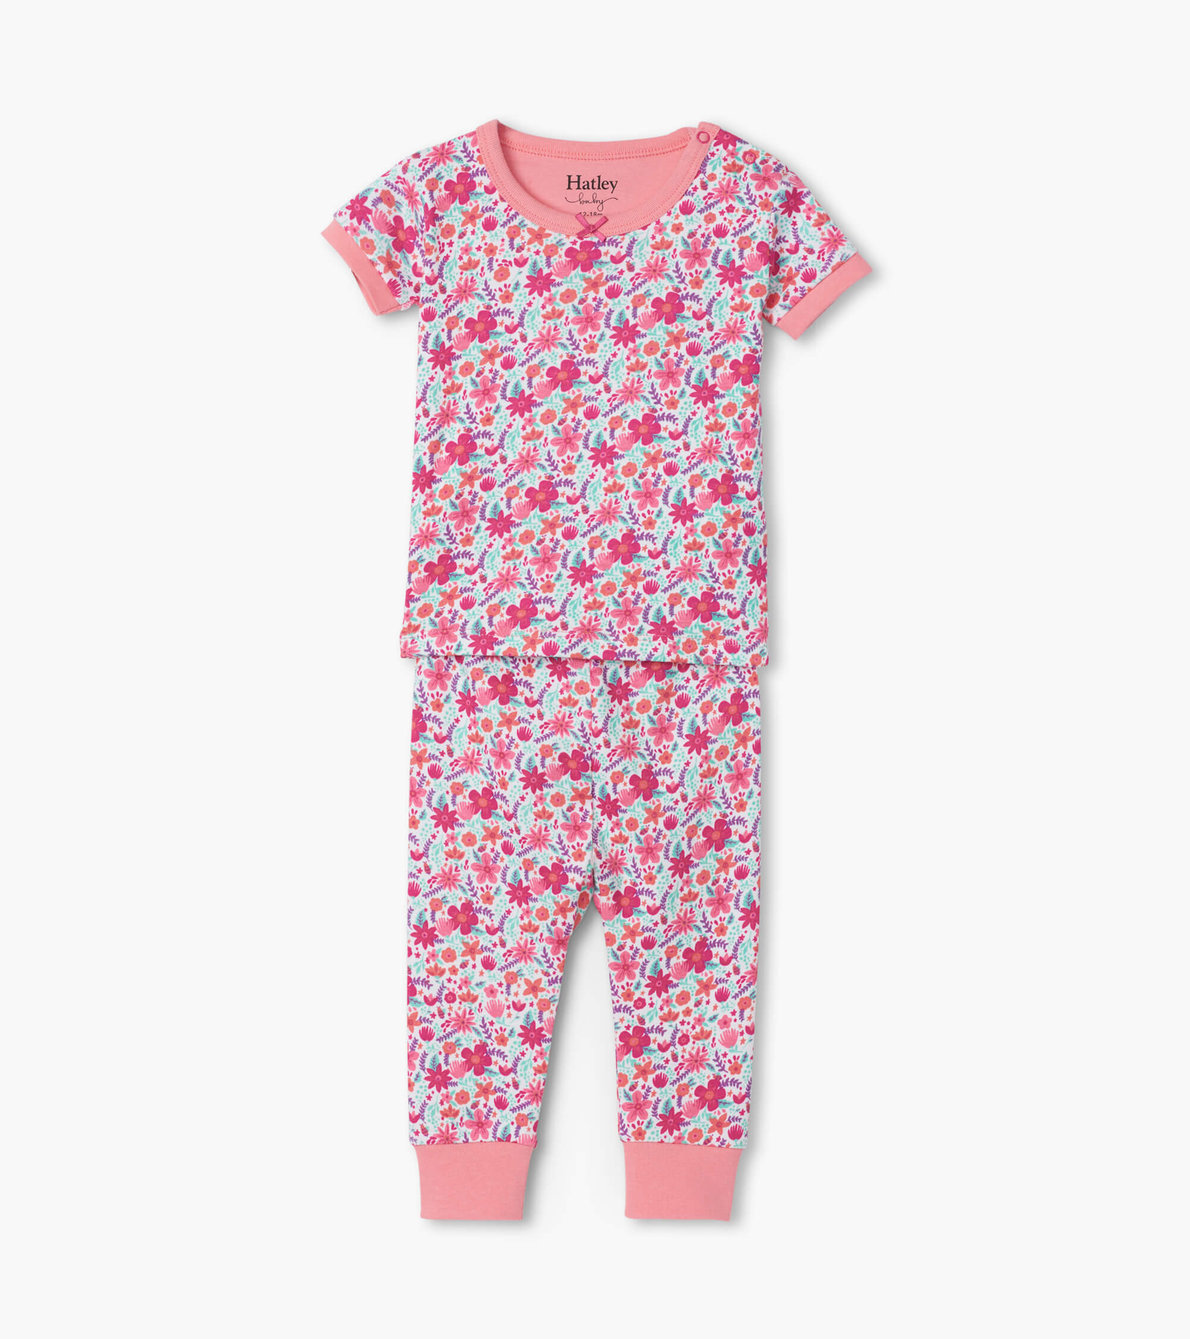 View larger image of Summer Garden Organic Cotton Baby Short Sleeve Pajama Set